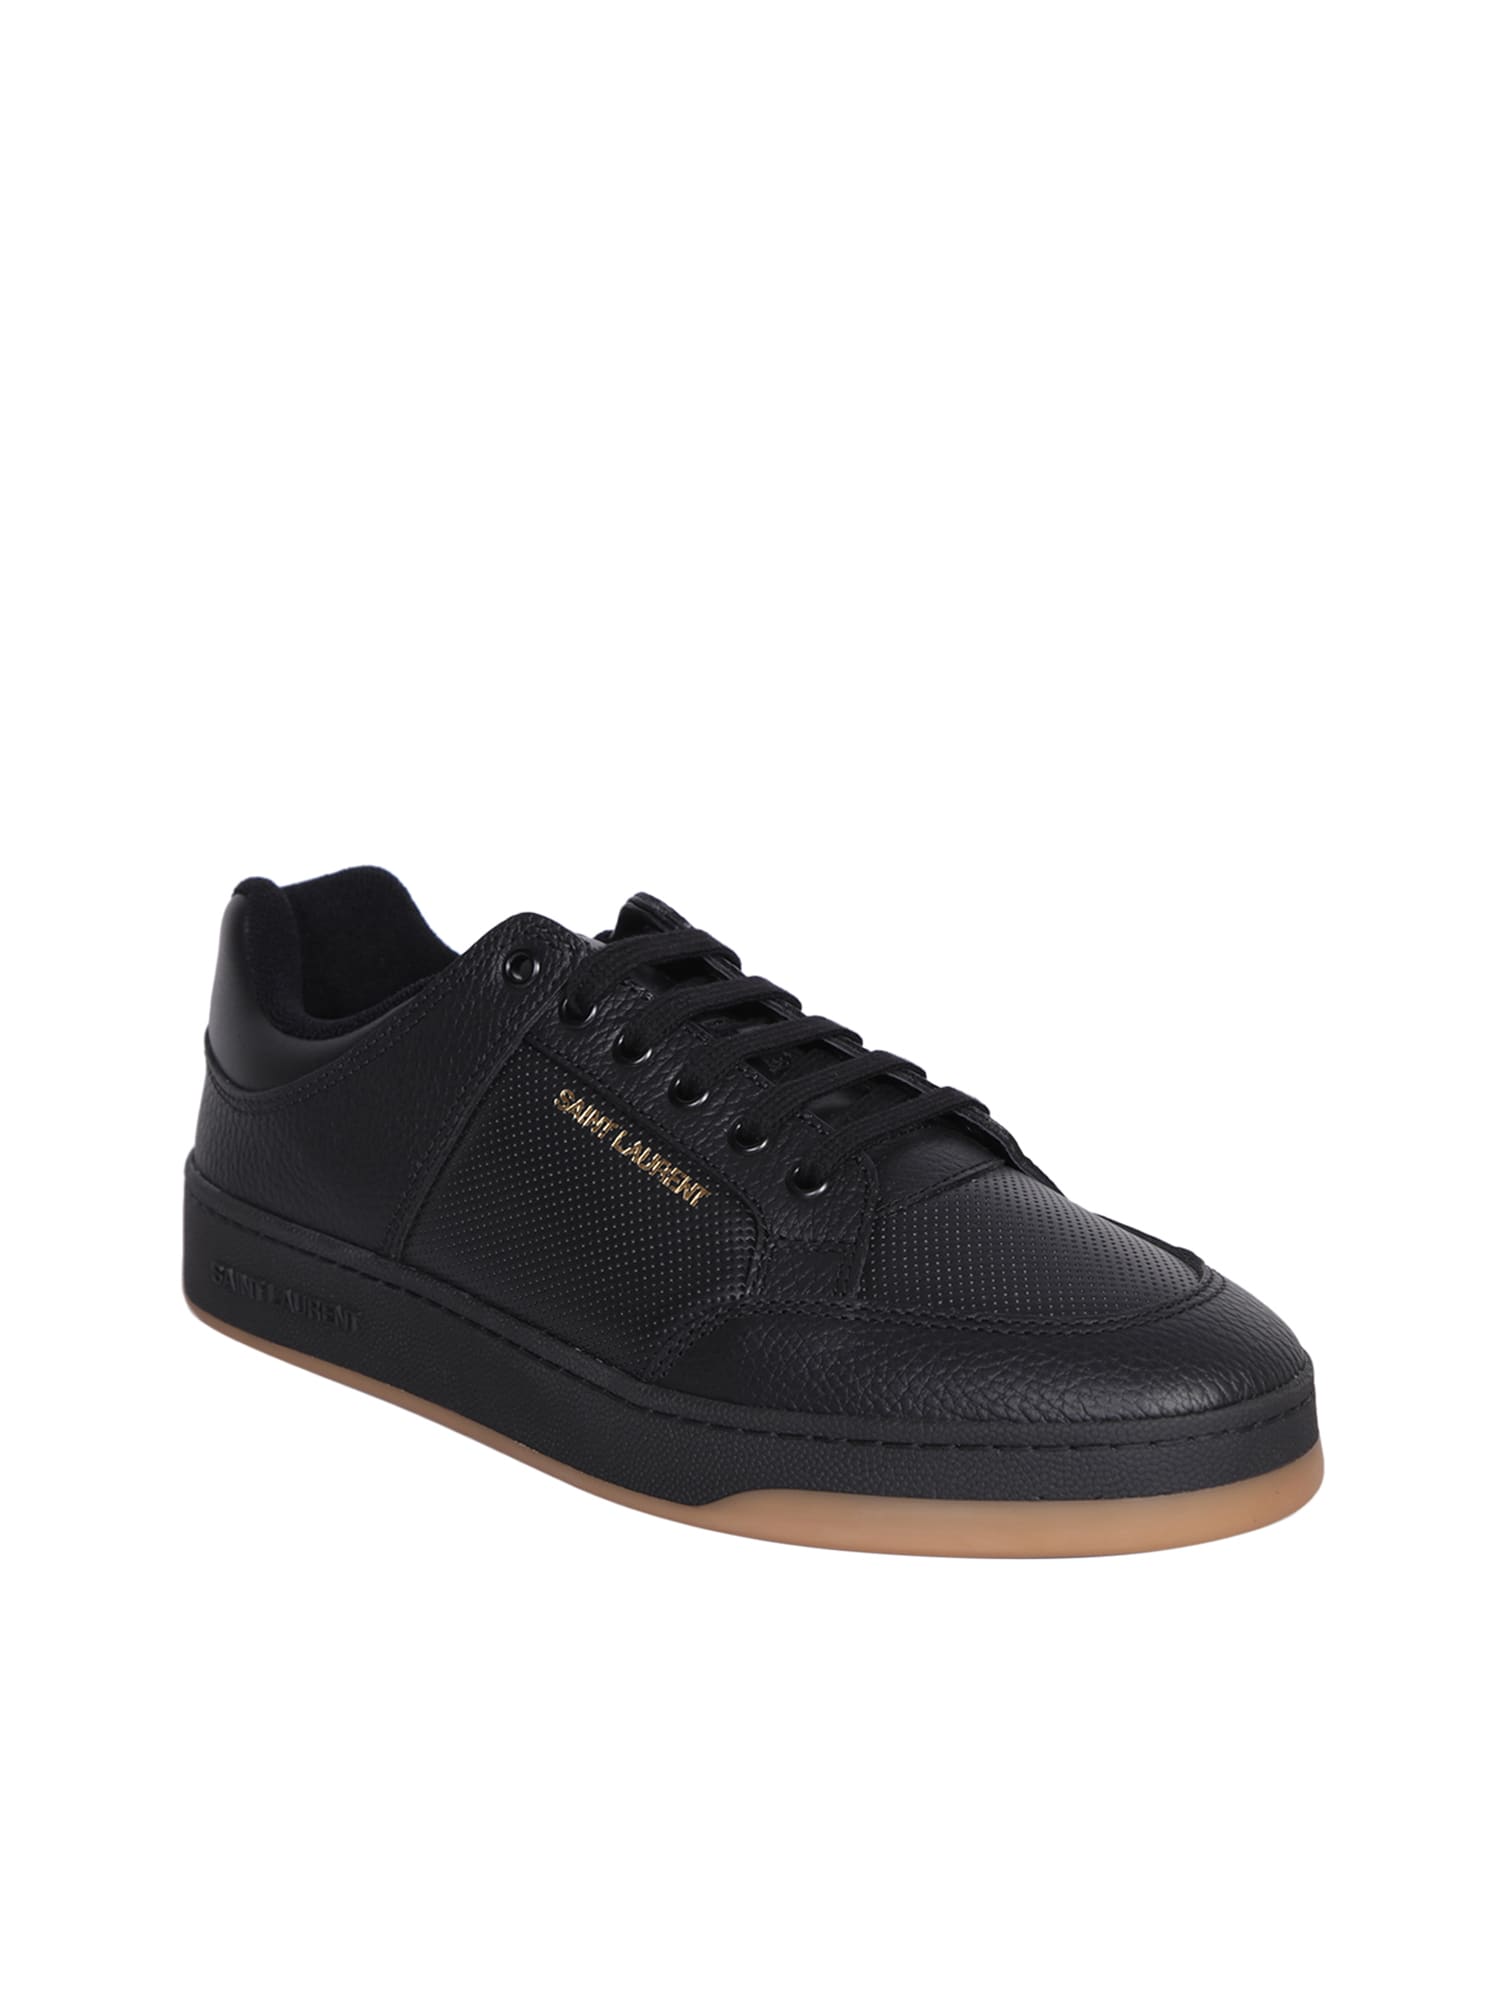 Shop Saint Laurent Sneakers Sl/61 In Black